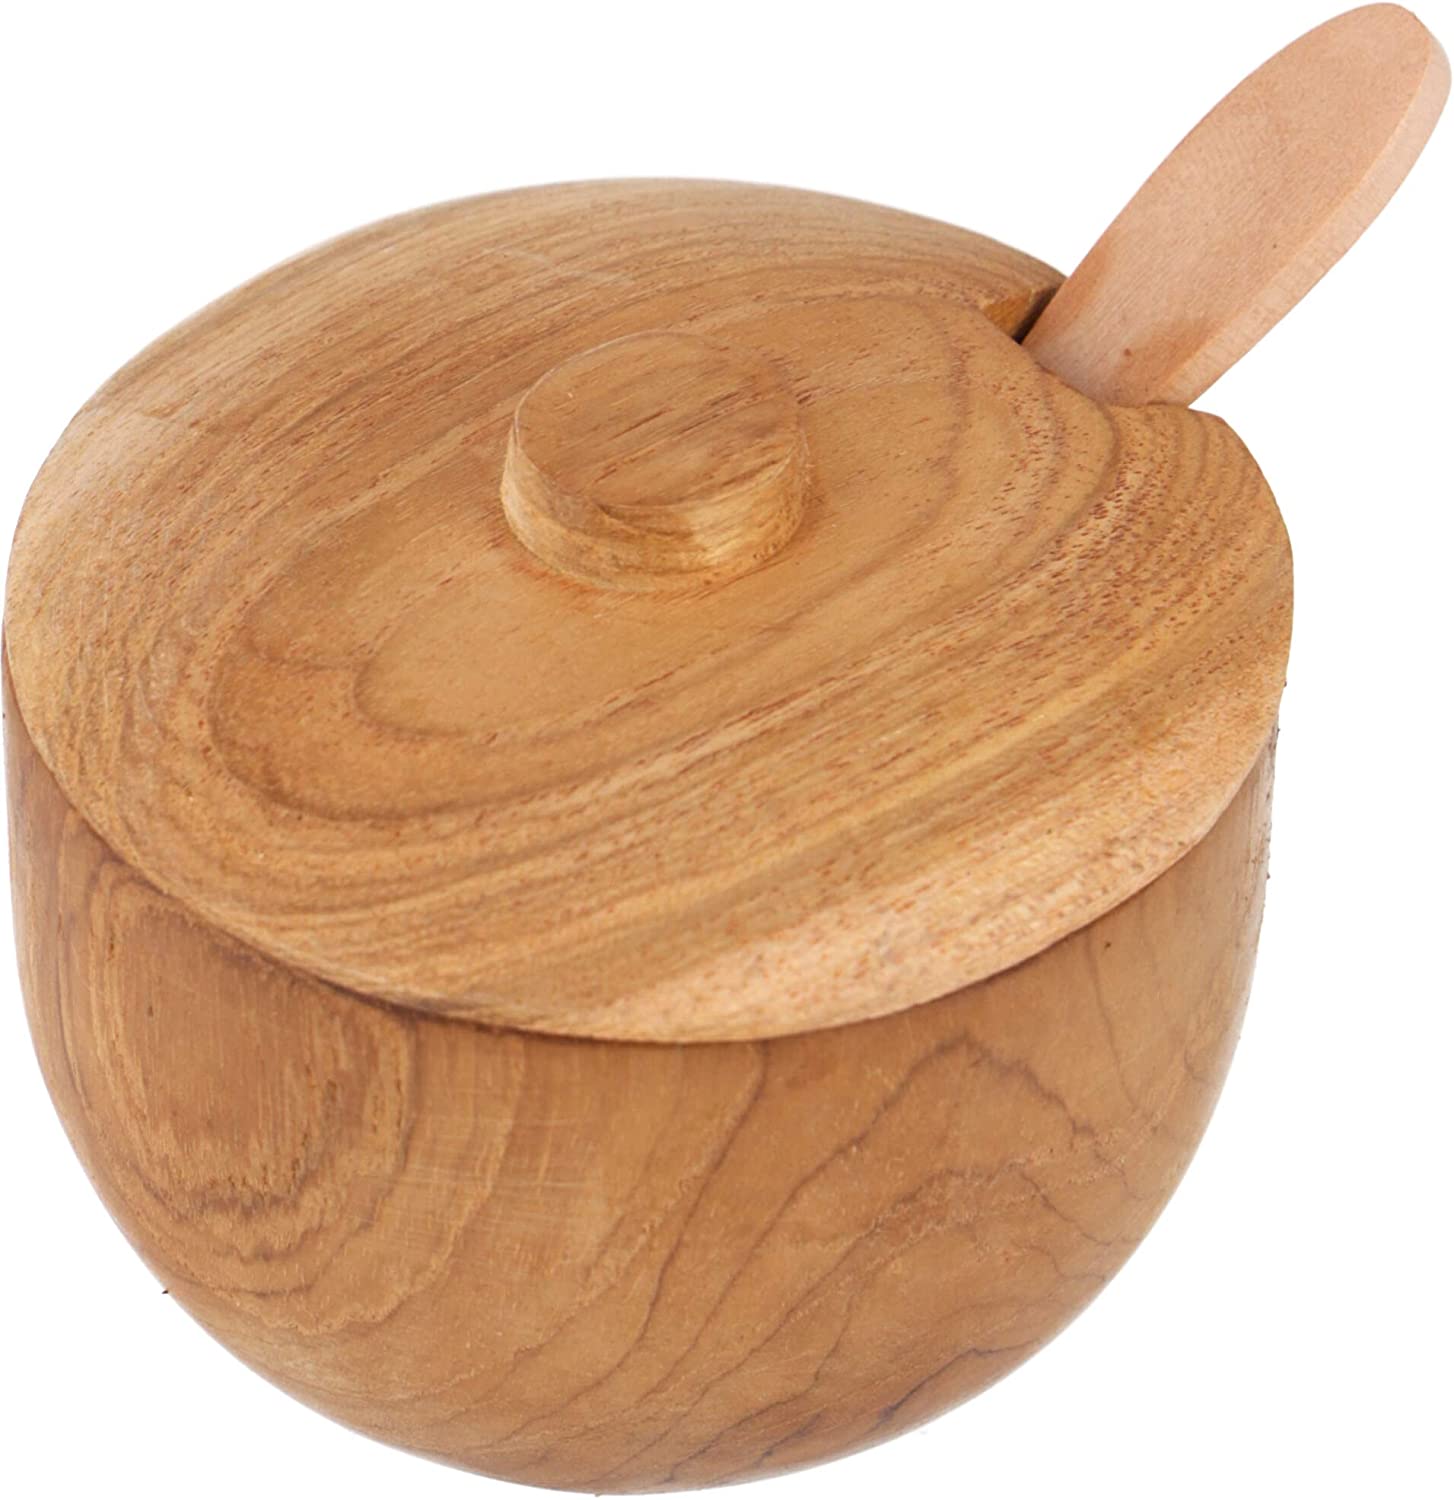 Guru-Shop GURU SHOP Exotic Sugar Bowl, Spice Jar, Including Wooden Spoon, Brown, 7 x 8 x 8 cm, Kitchen Accessories, Other